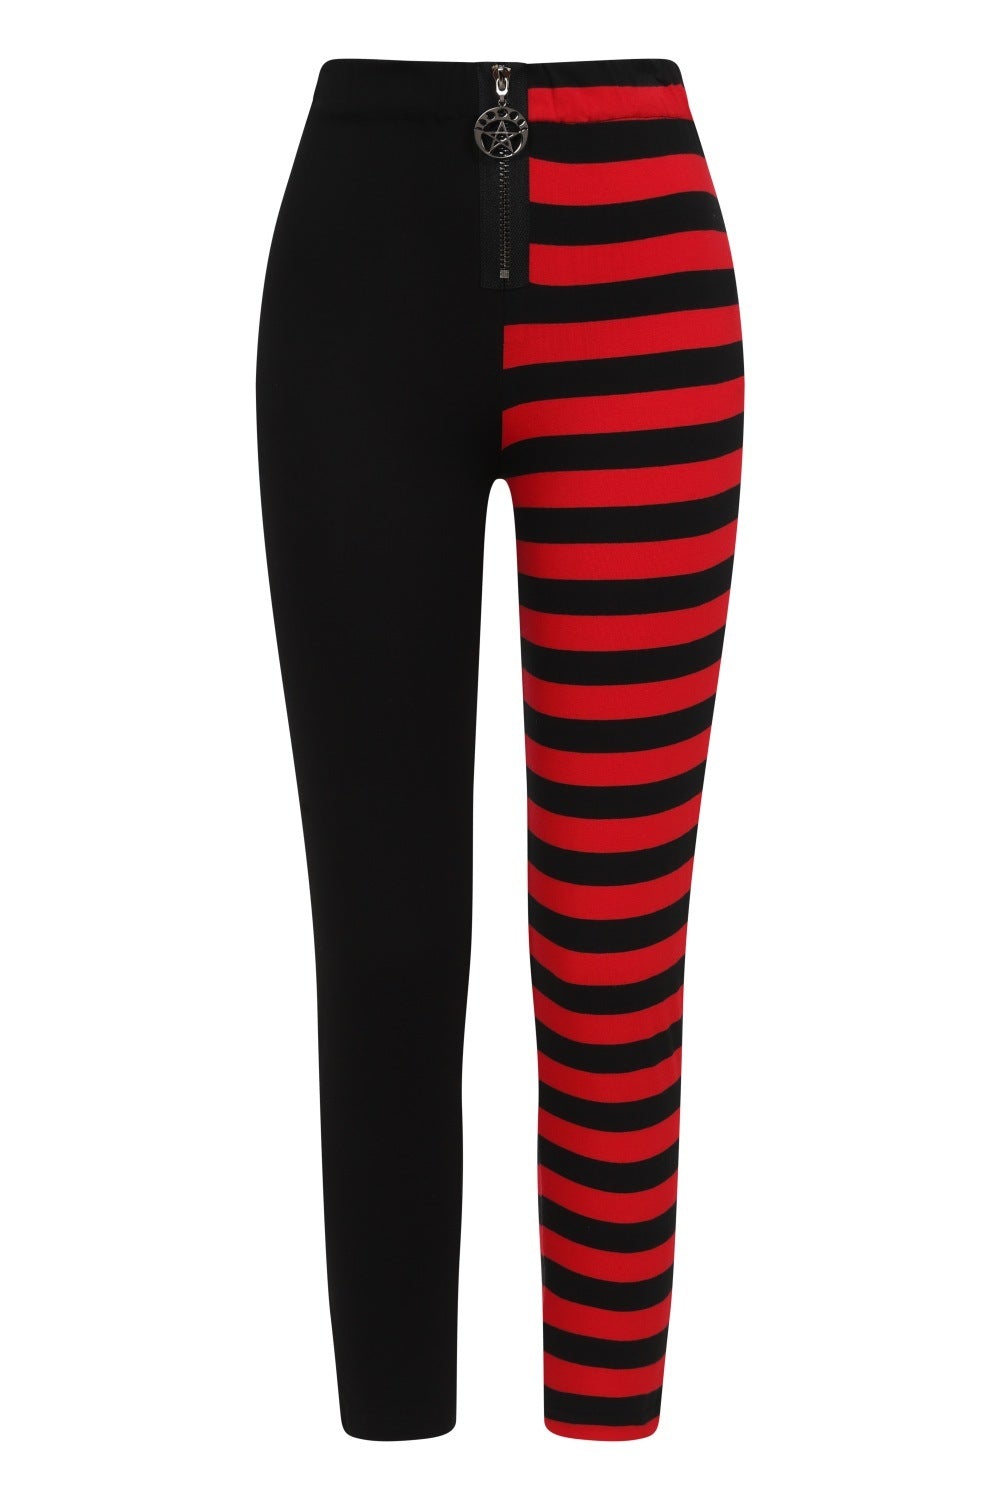 Black & Red Vertical Stripe Leggings | Hot Topic